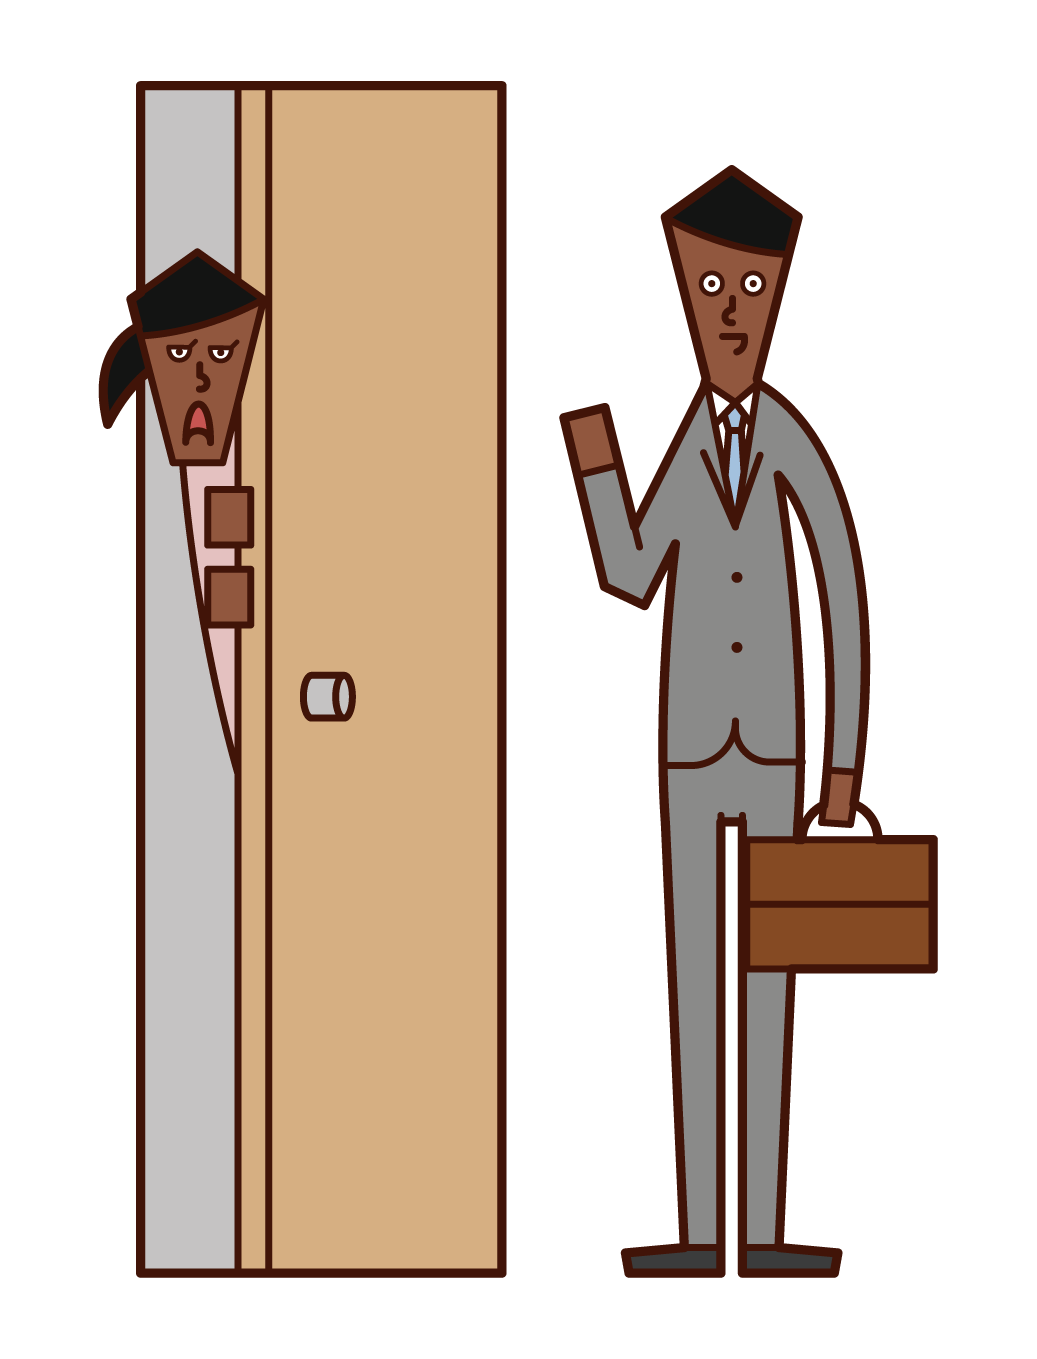 Illustration of a woman who is wary of door-to-door sales staff